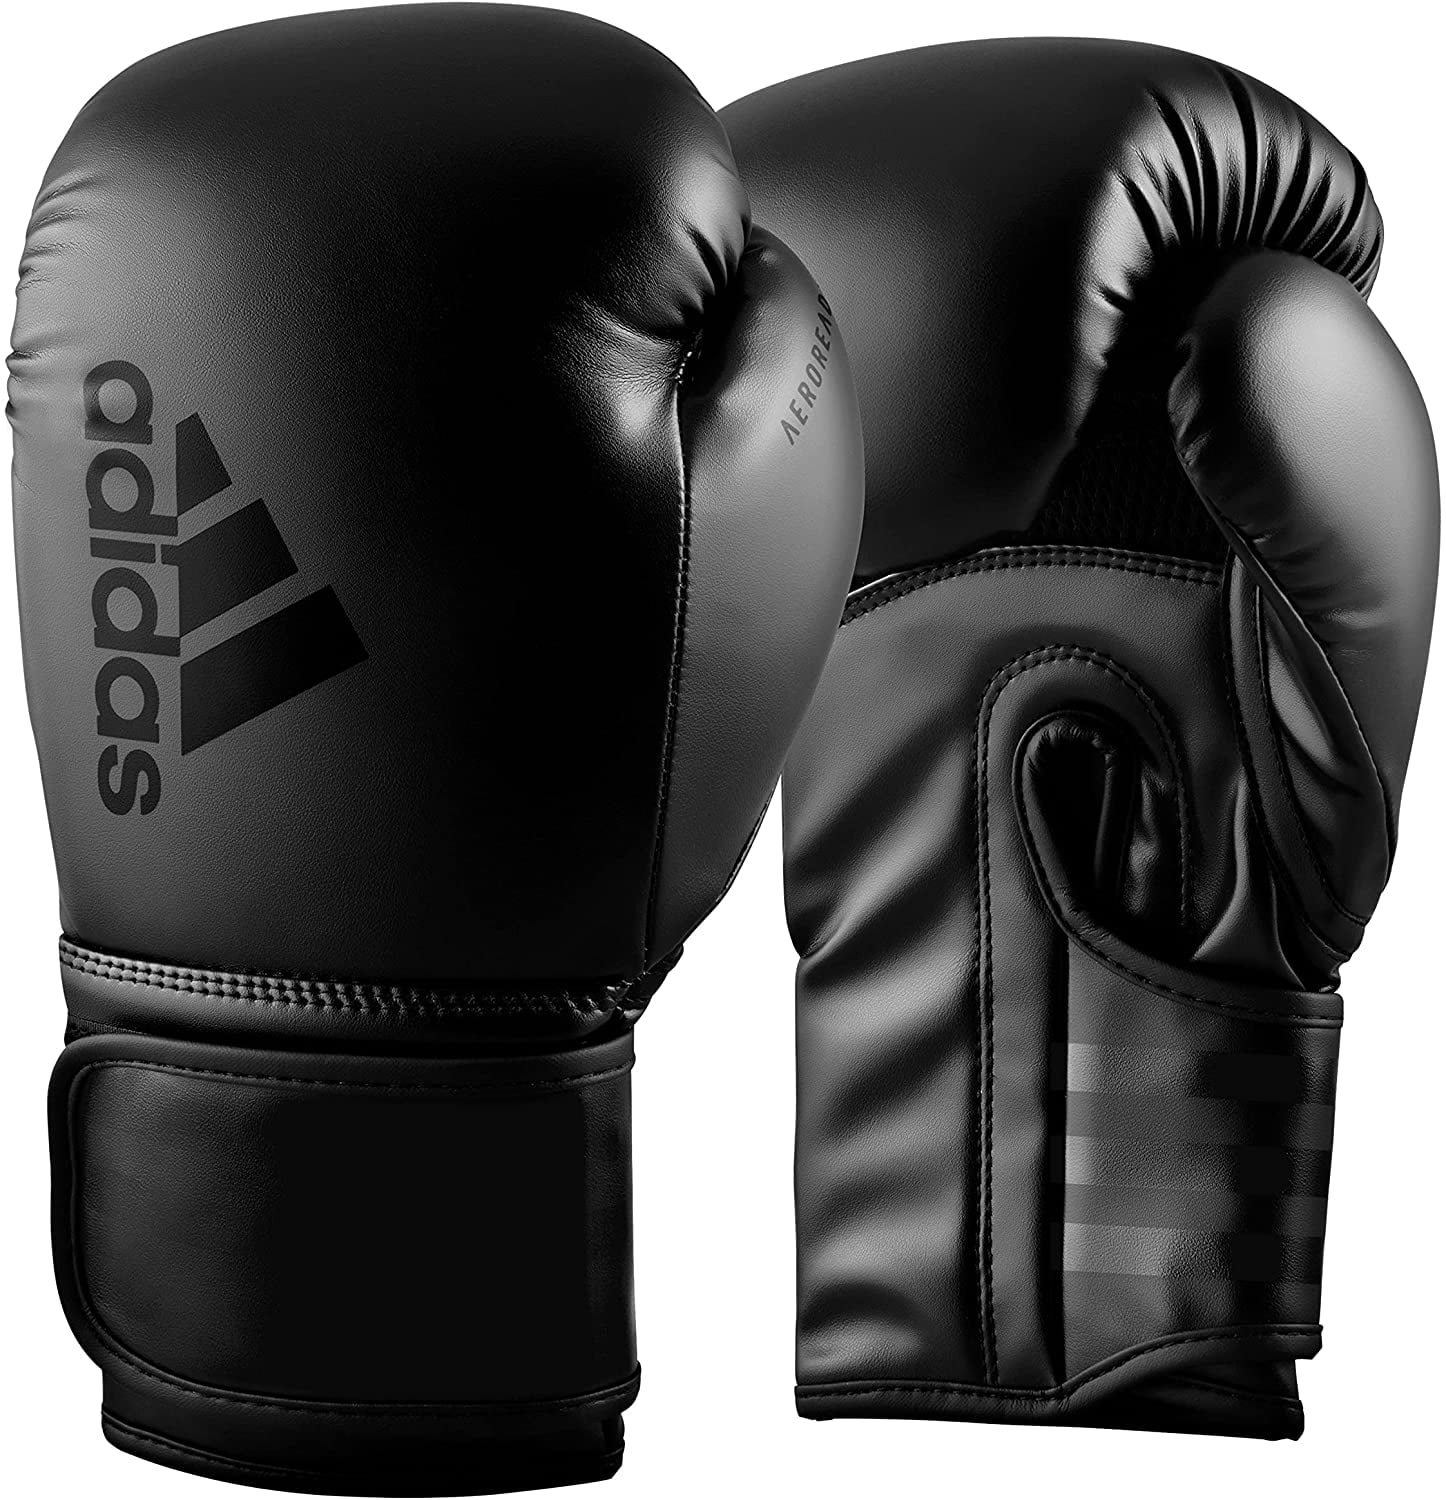 Black, 12 Oz Fire Team Fit Boxing Gloves 